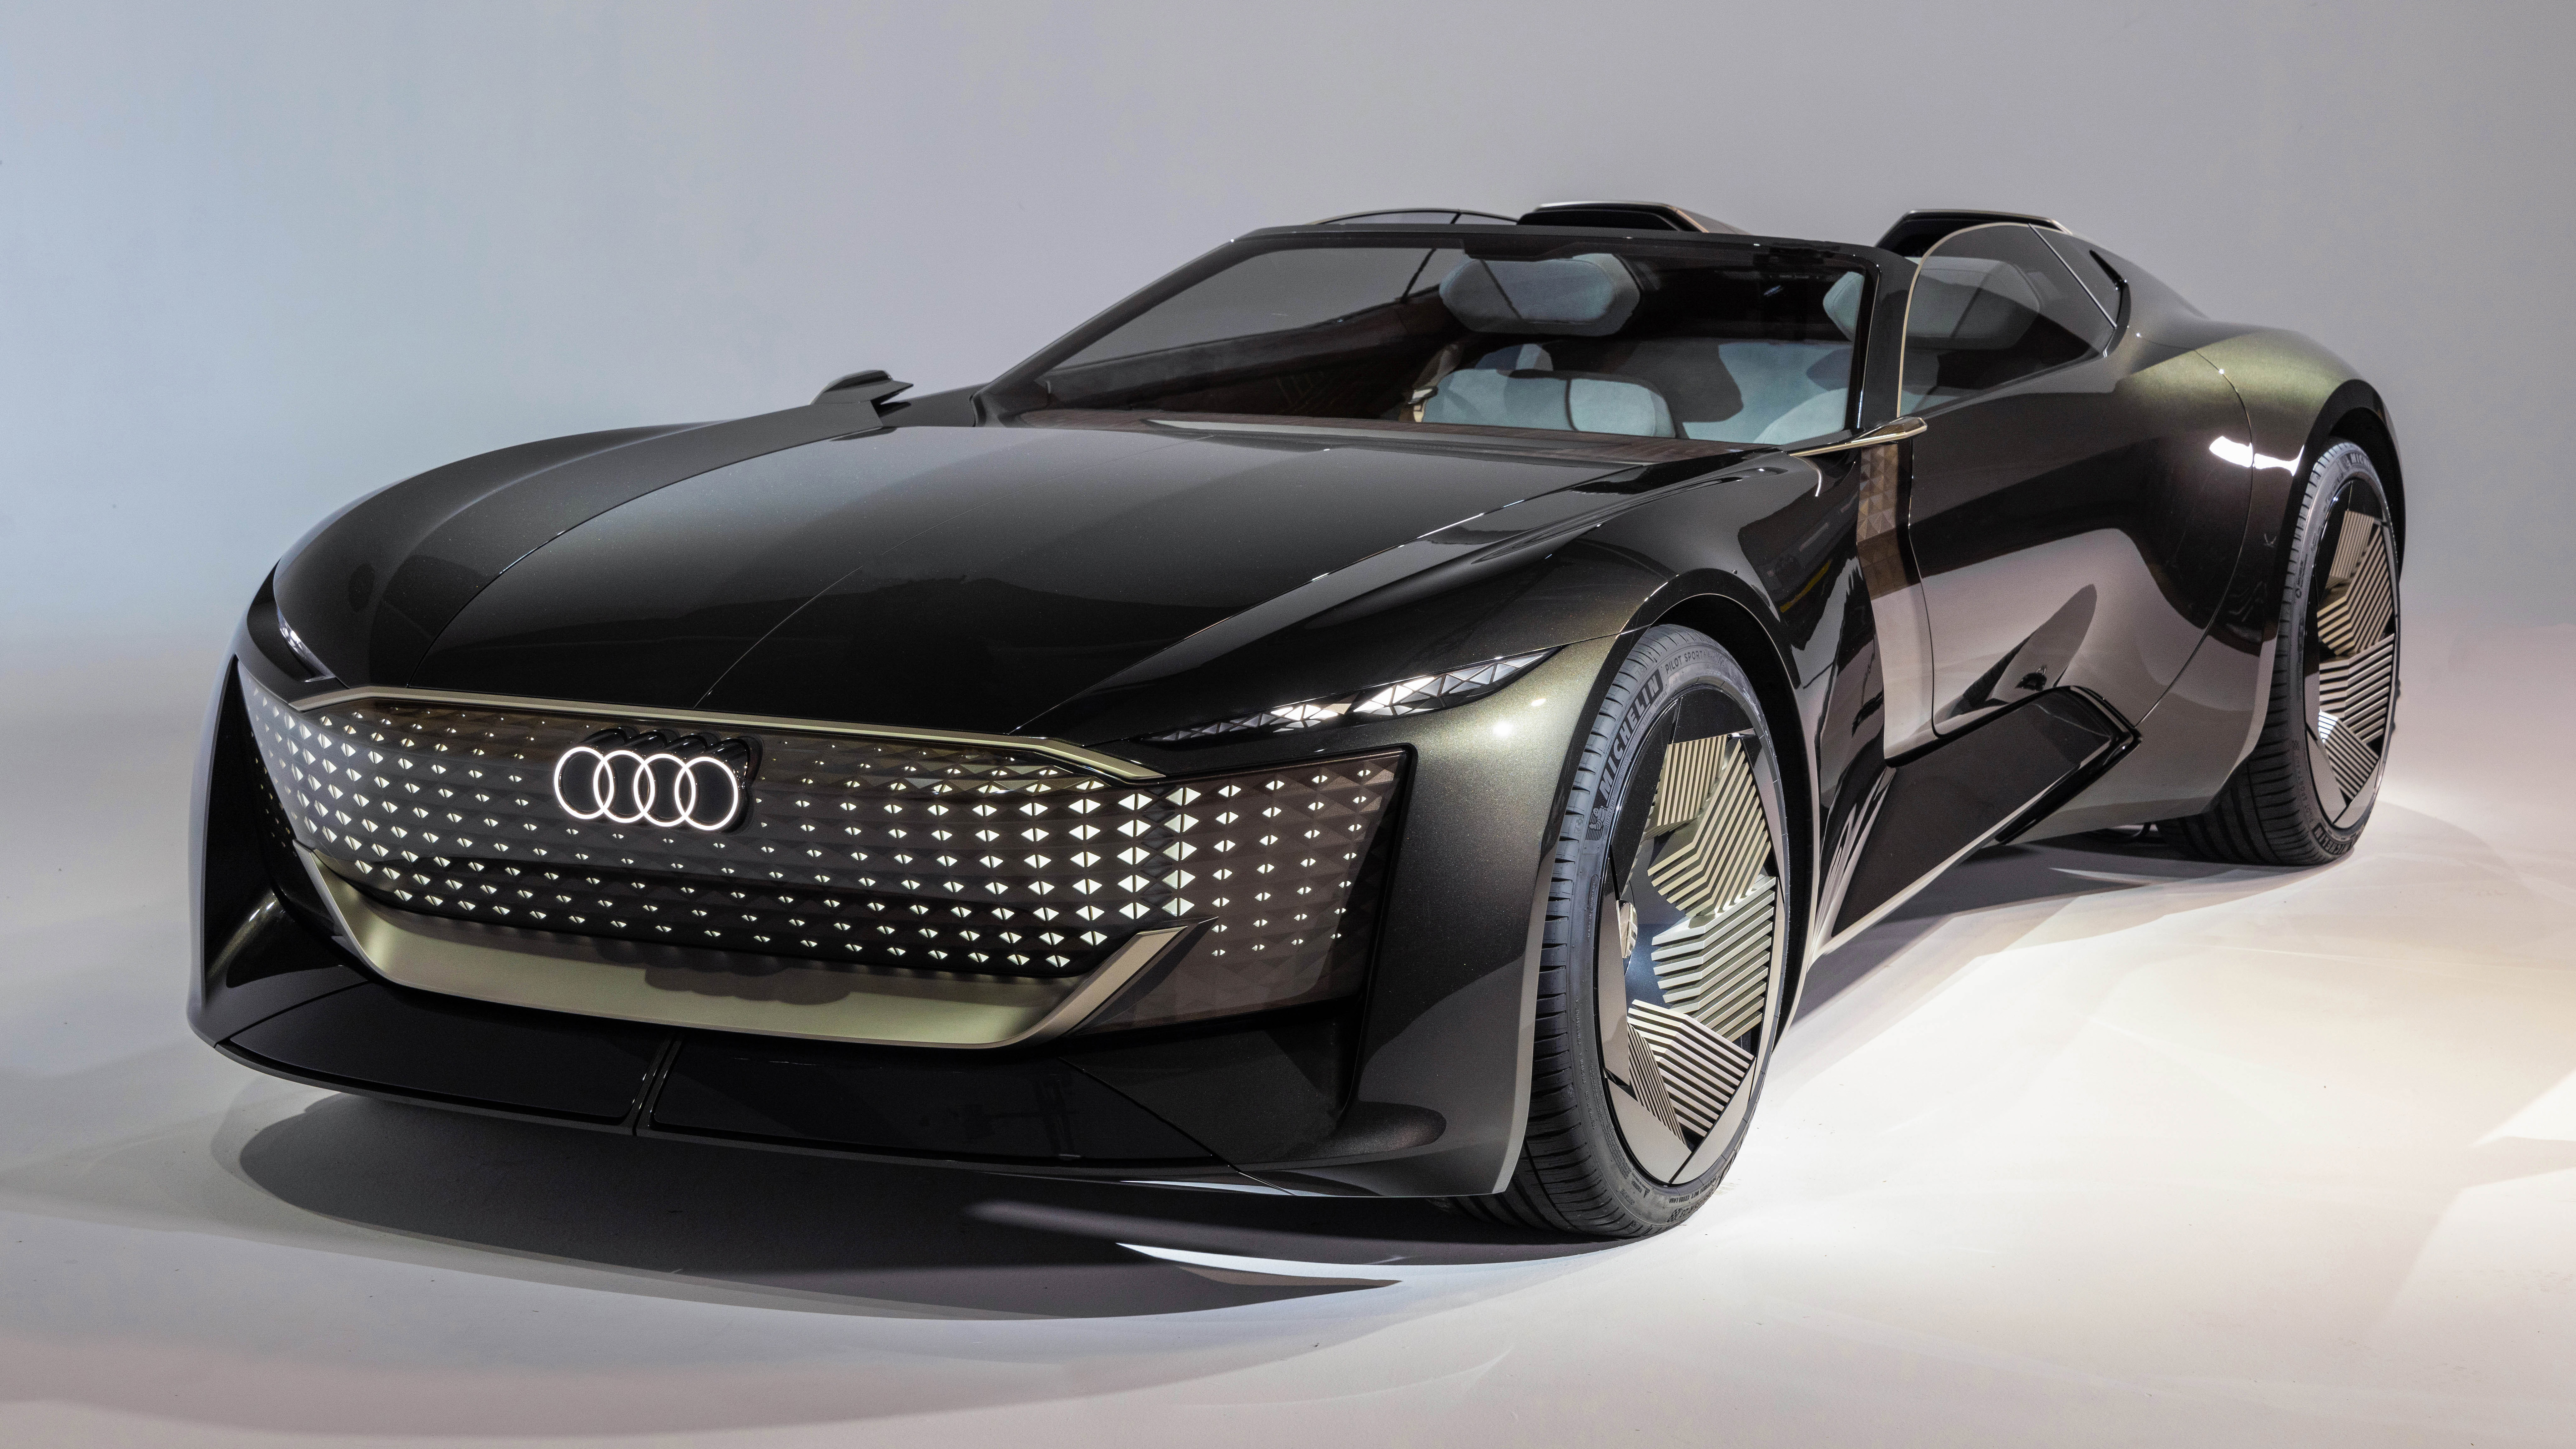 Audi Skysphere Concept 2021 4k 8k Wallpaper Hd Car Wallpapers Id 19419